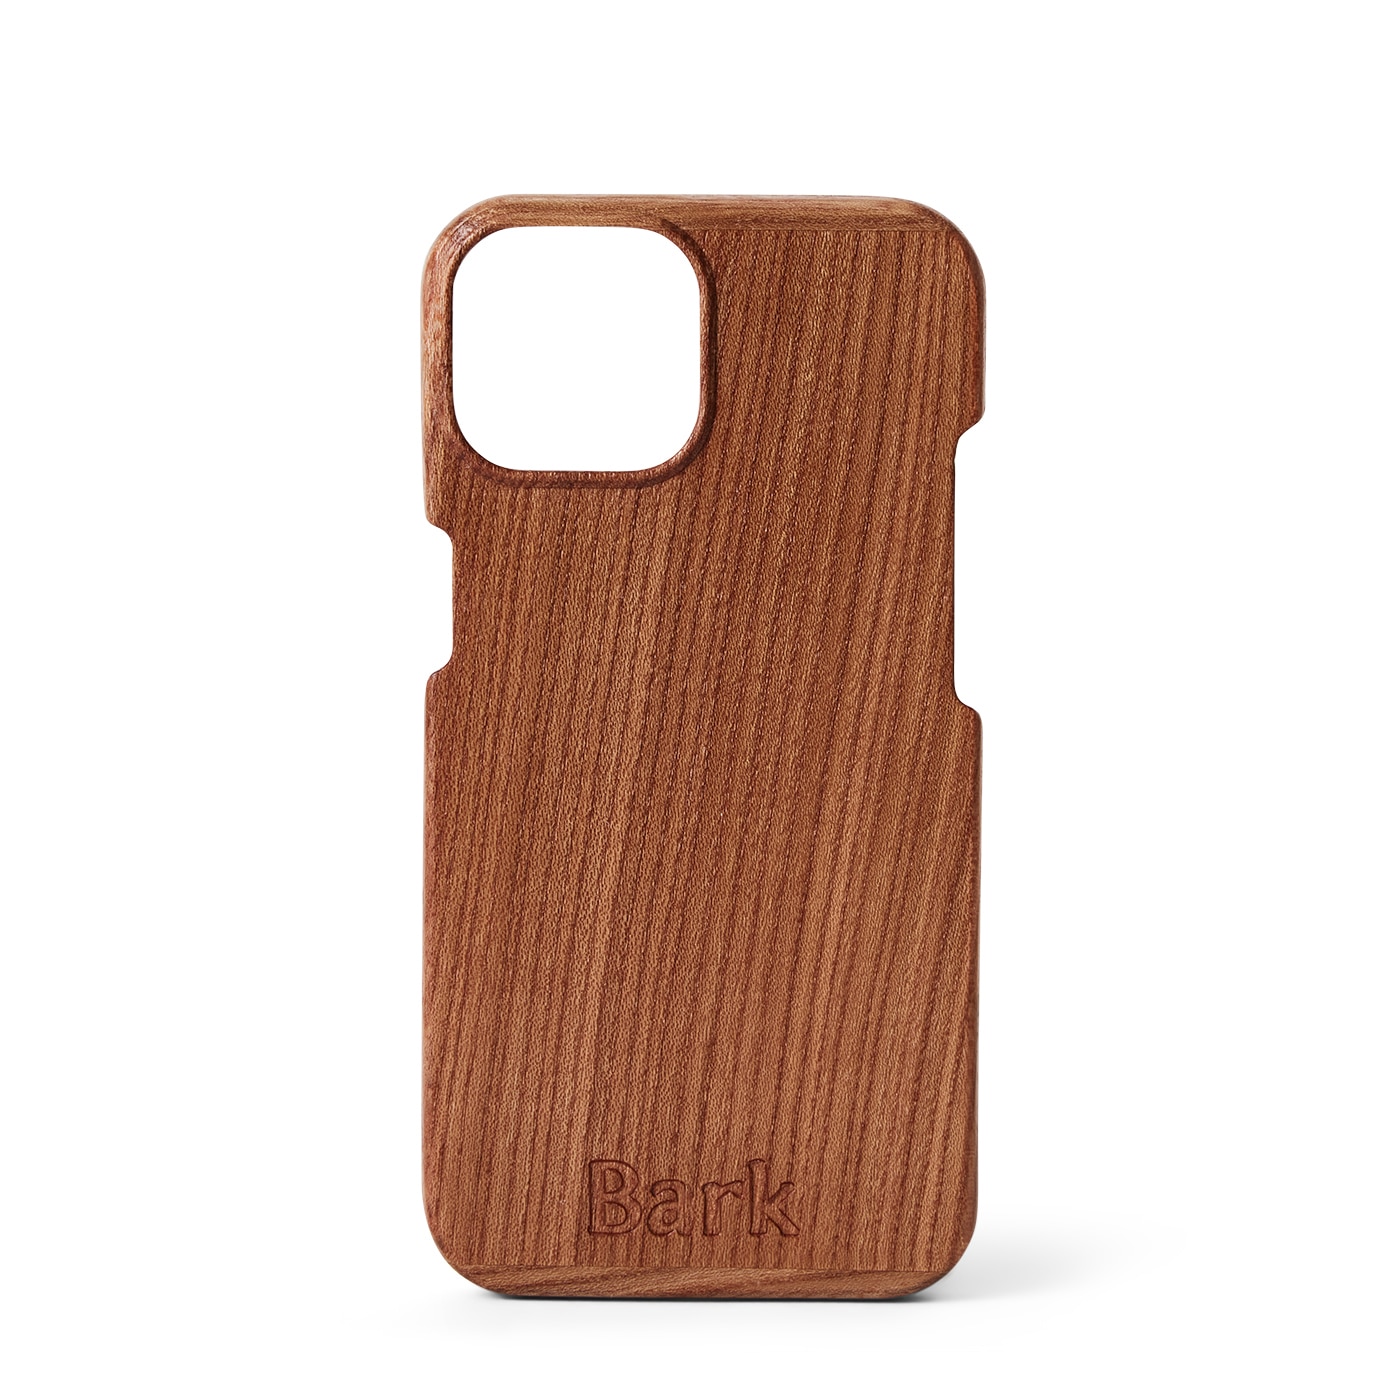 iPhone 14 case made of Swedish hardwood - Alm